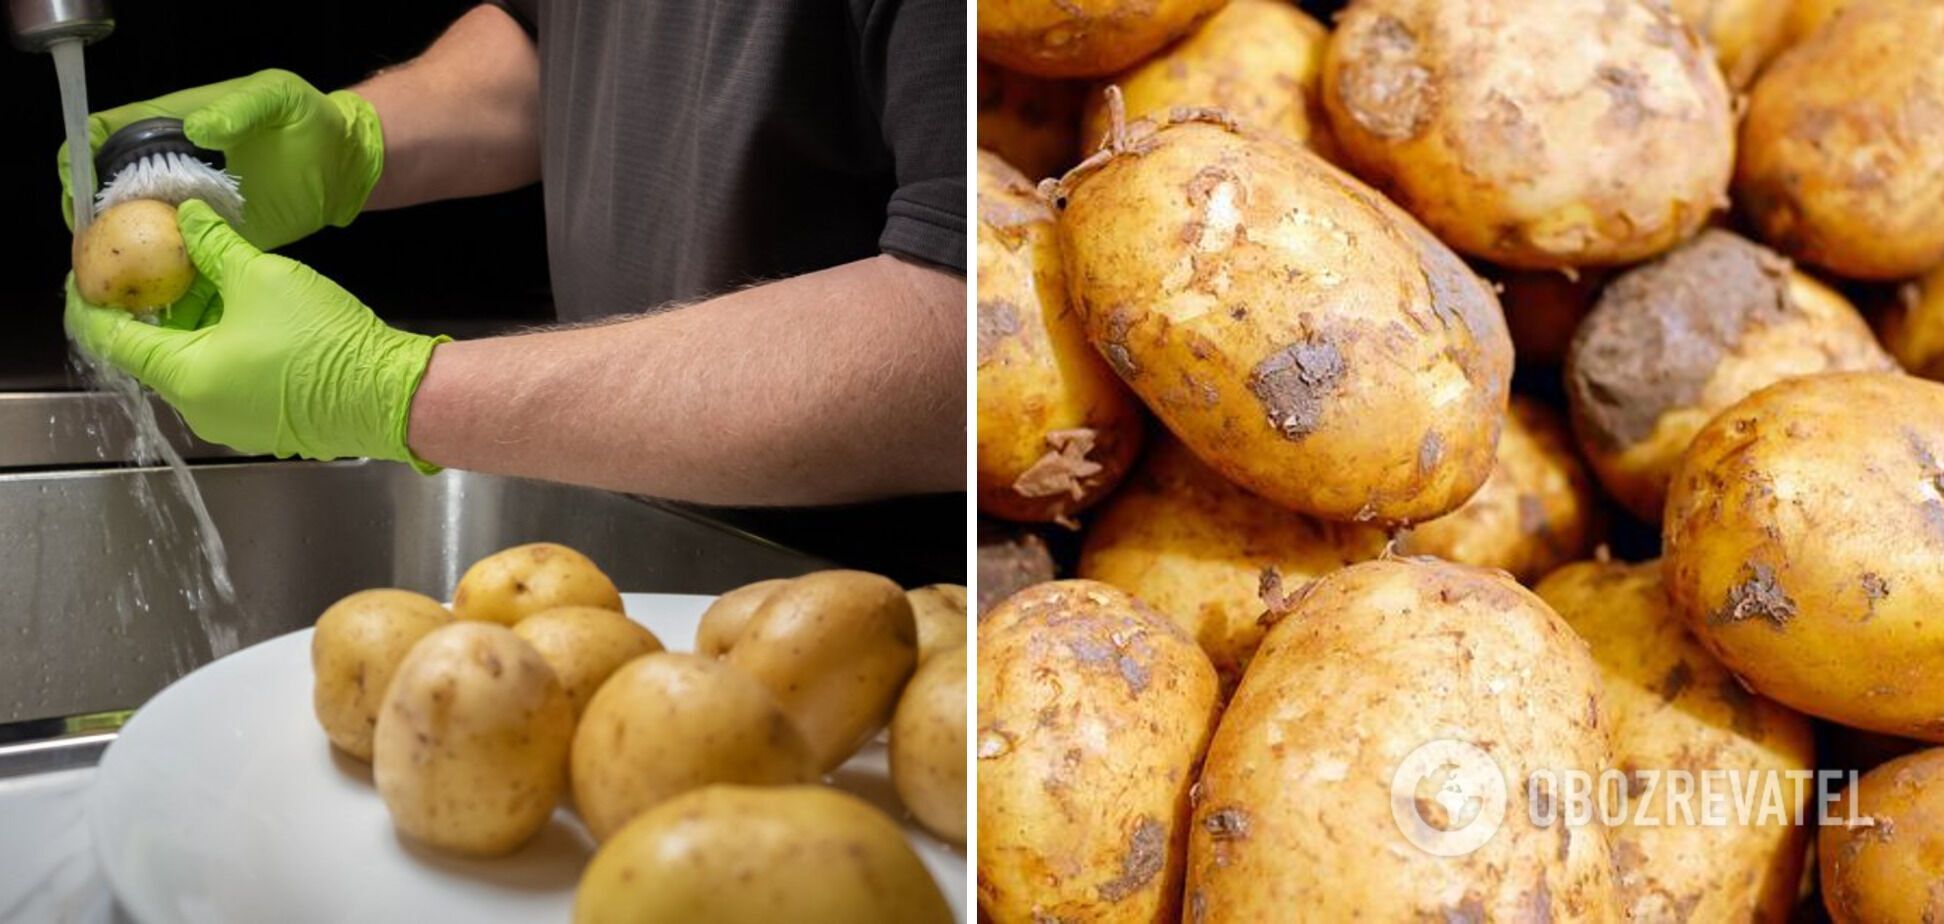 Low-starch potatoes